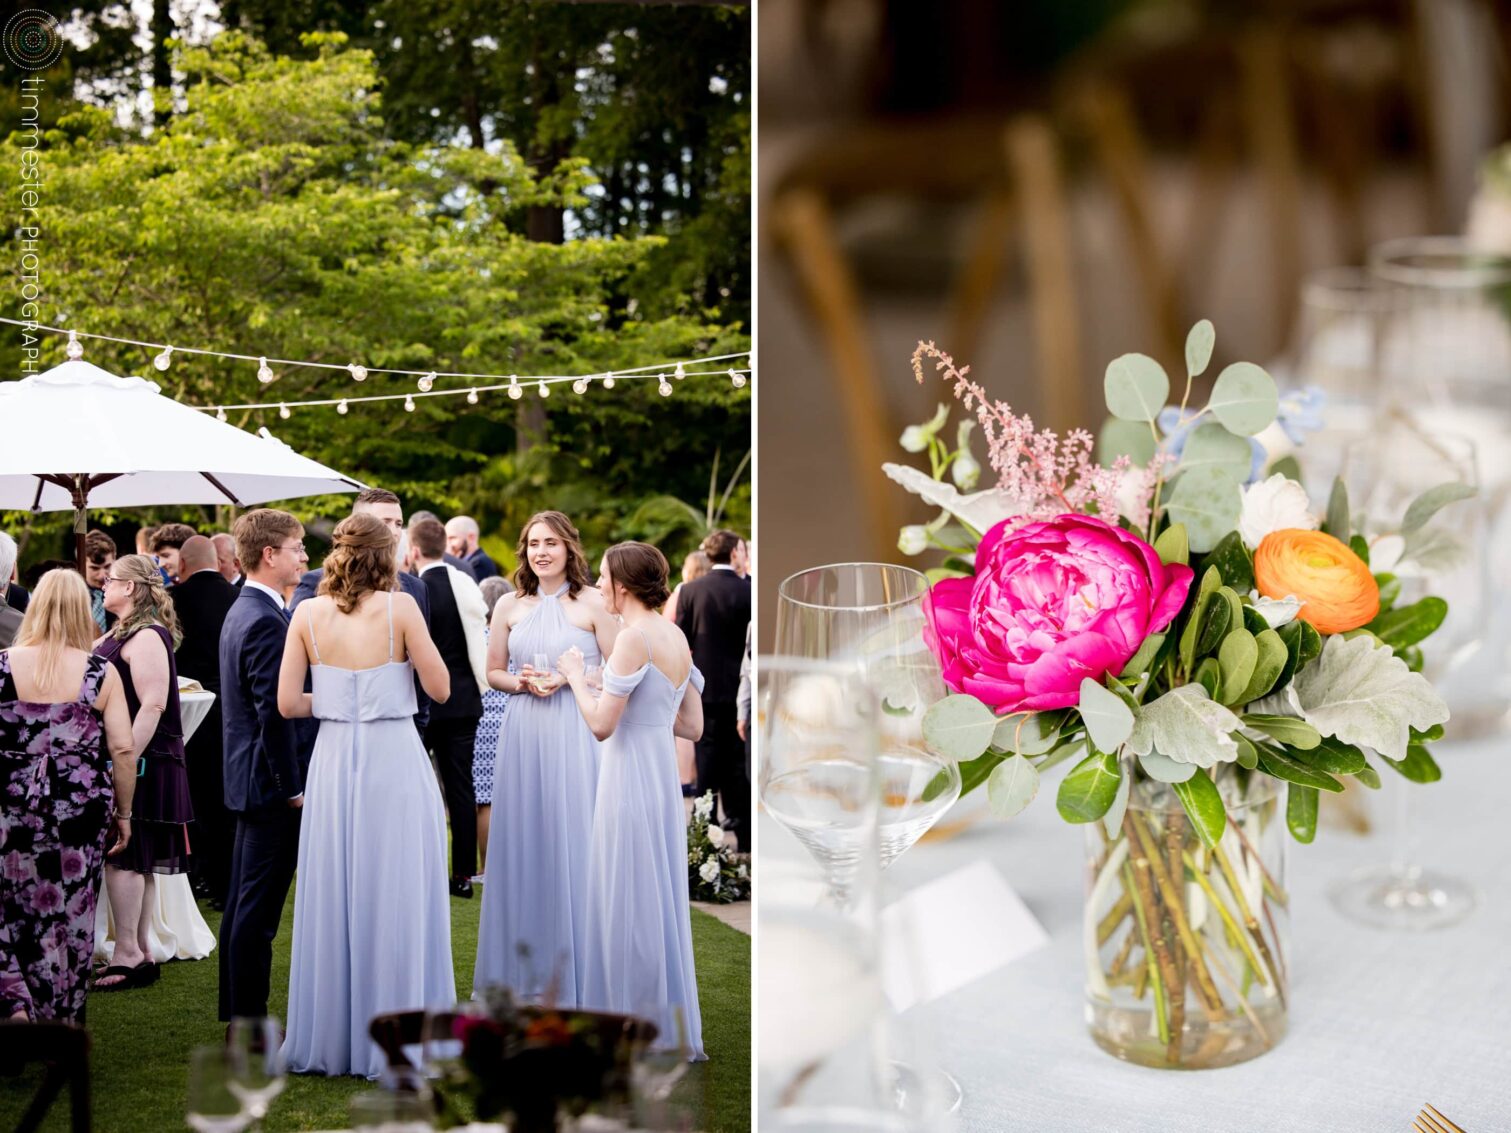 Duke Gardens outdoor wedding and reception